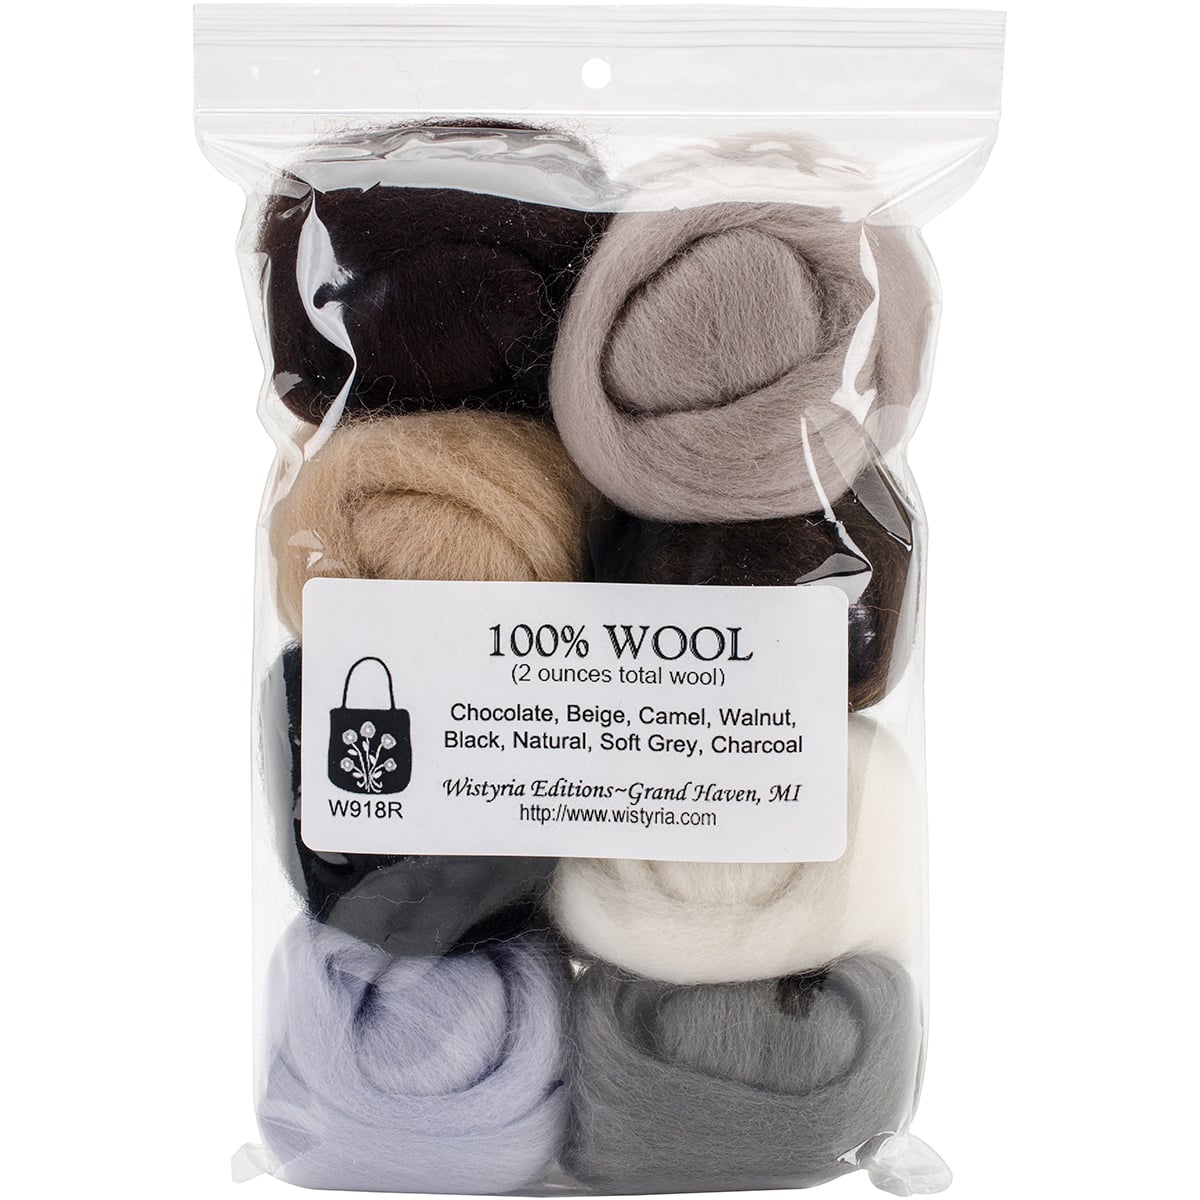 Wistyria Editions Neutrals Wool Roving Rolls, 2oz.